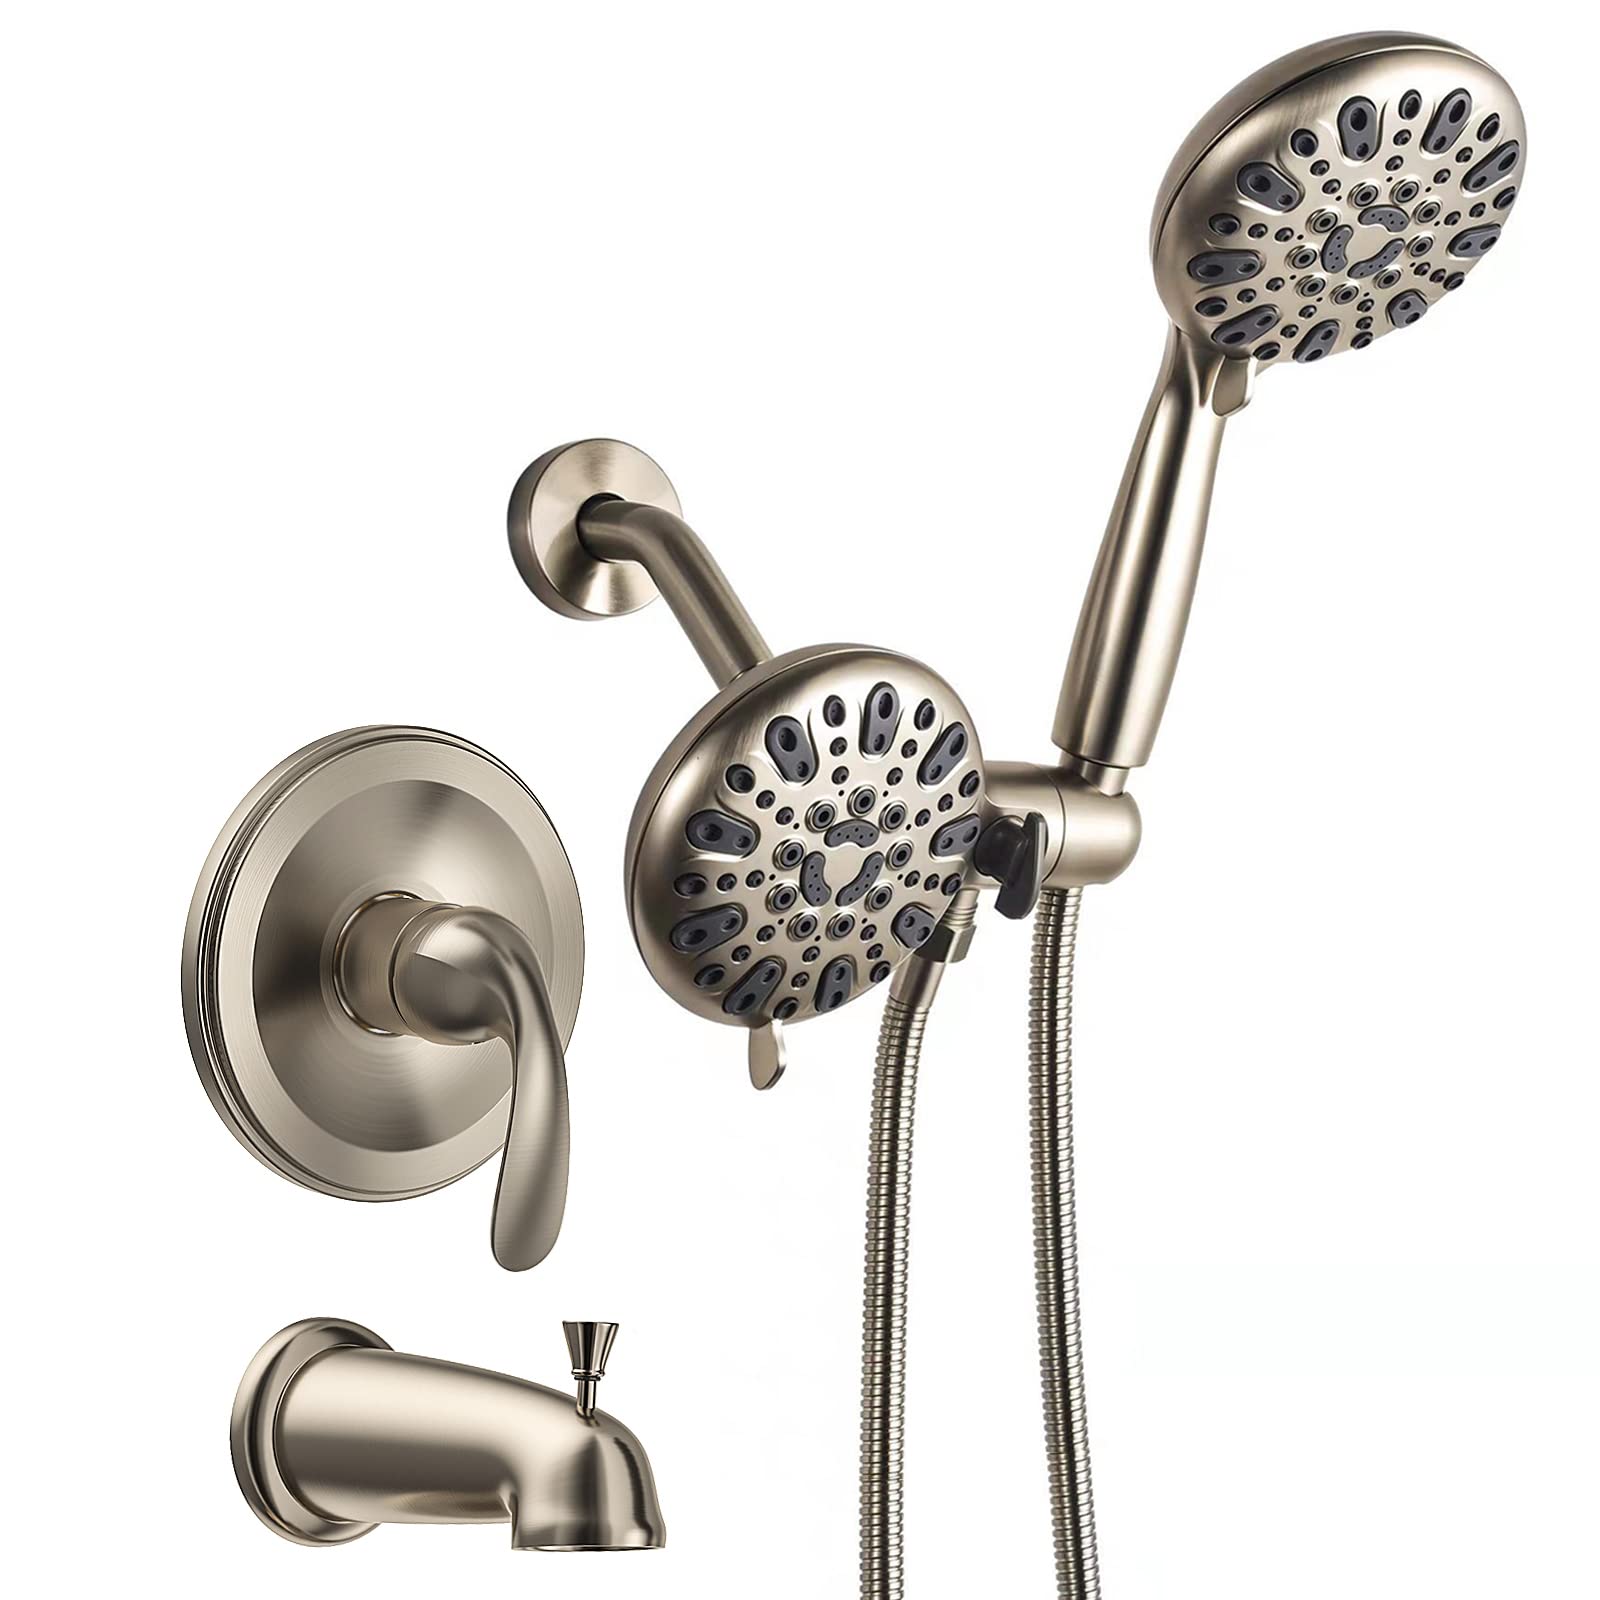 13 Best Tub Shower Faucet For 2023 1692751176 